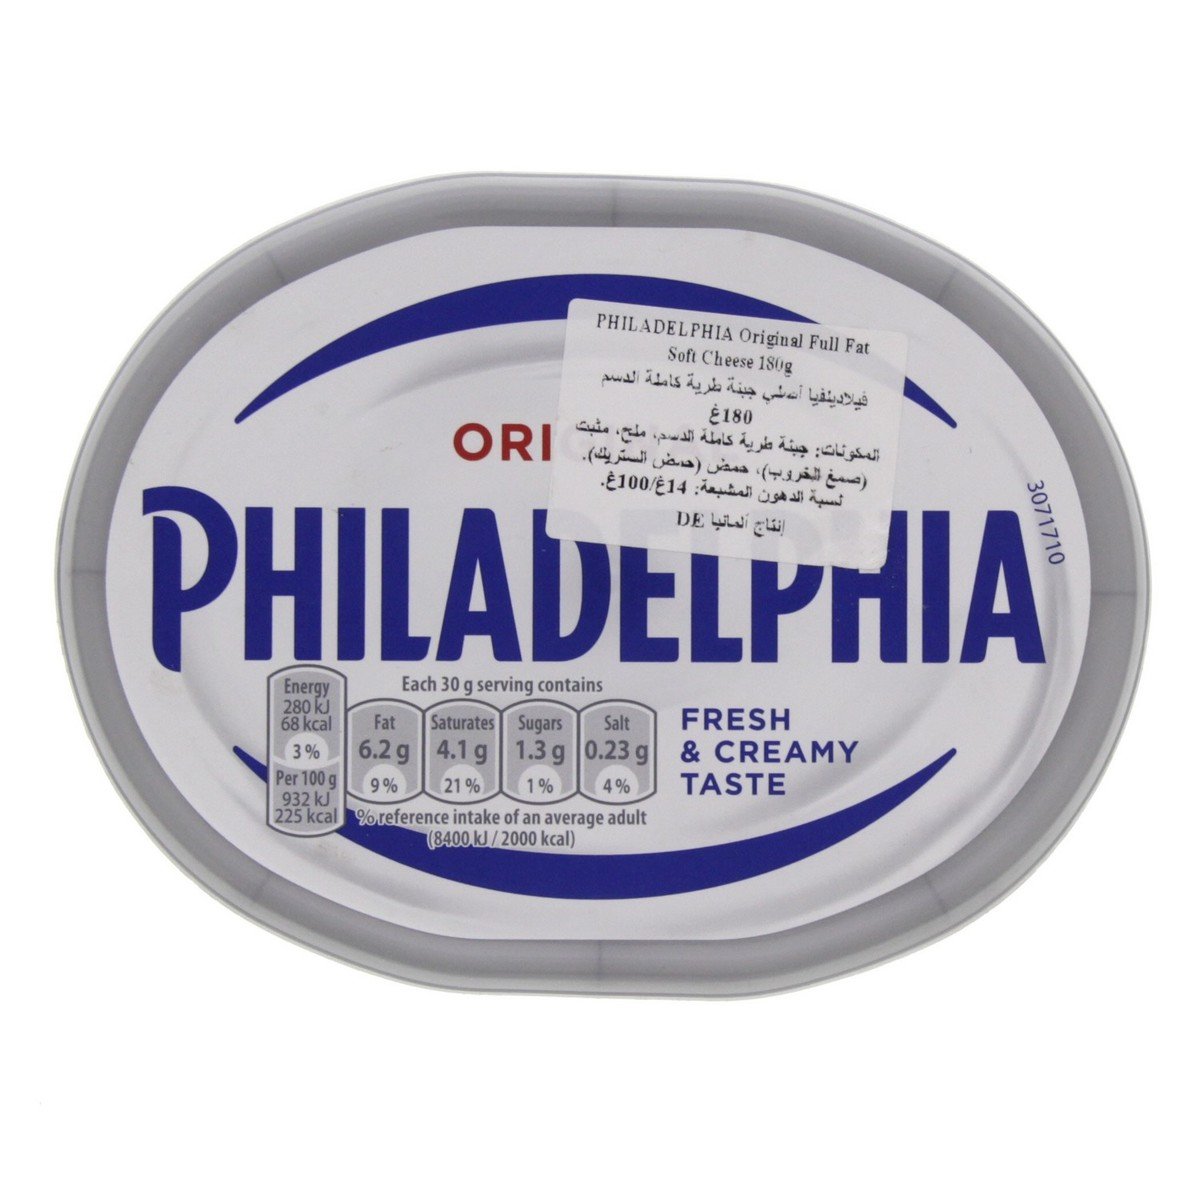 Philadelphia Original Full Fat Soft Cheese 180 g